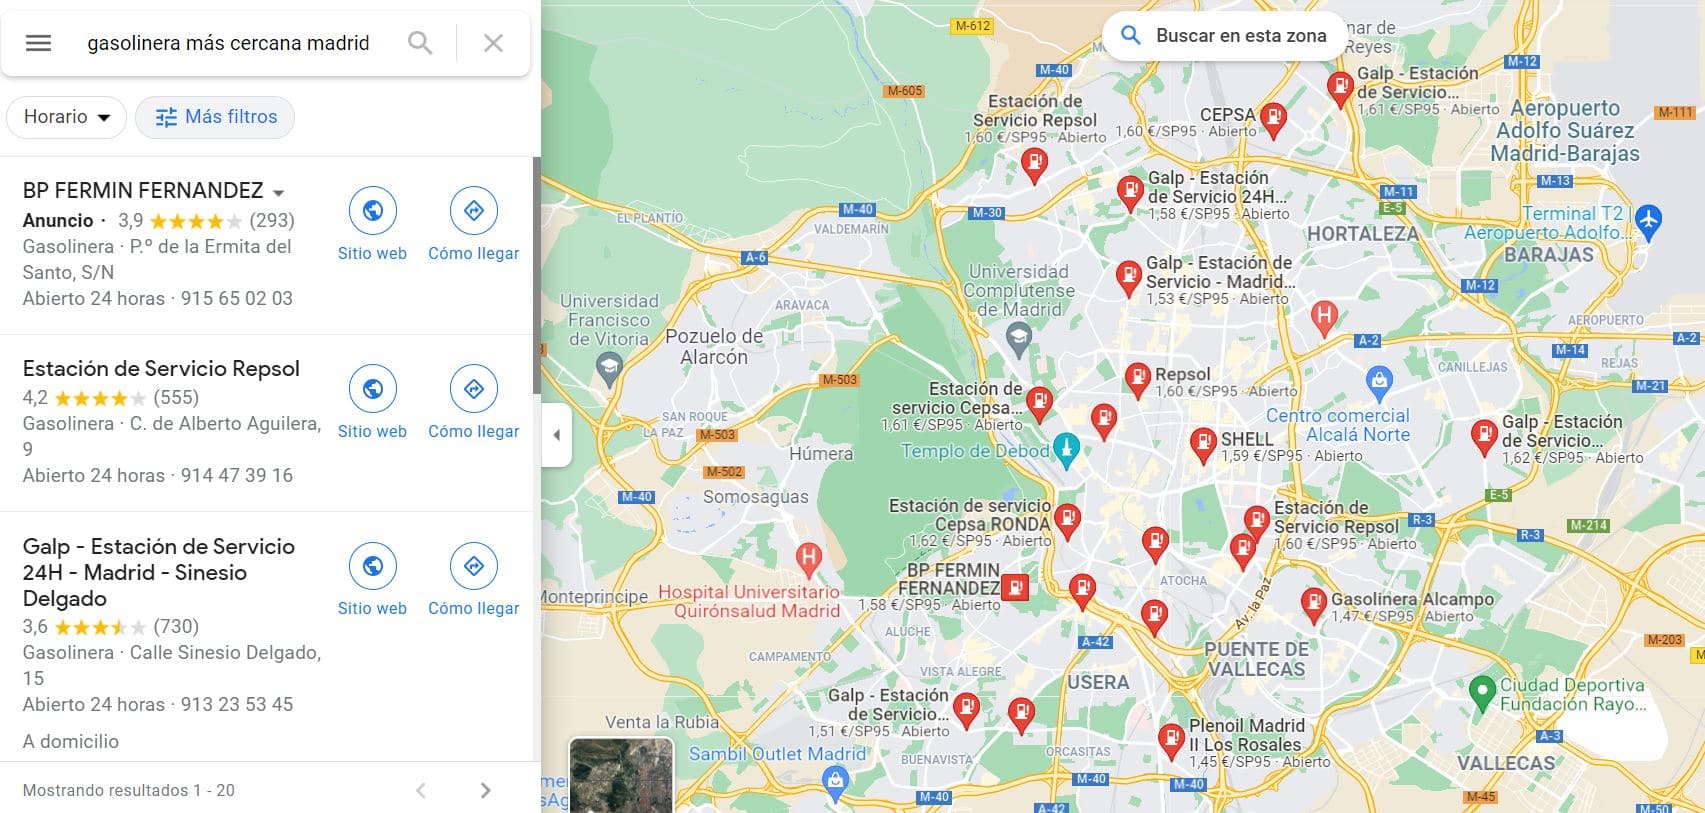 nearest gas station in google maps